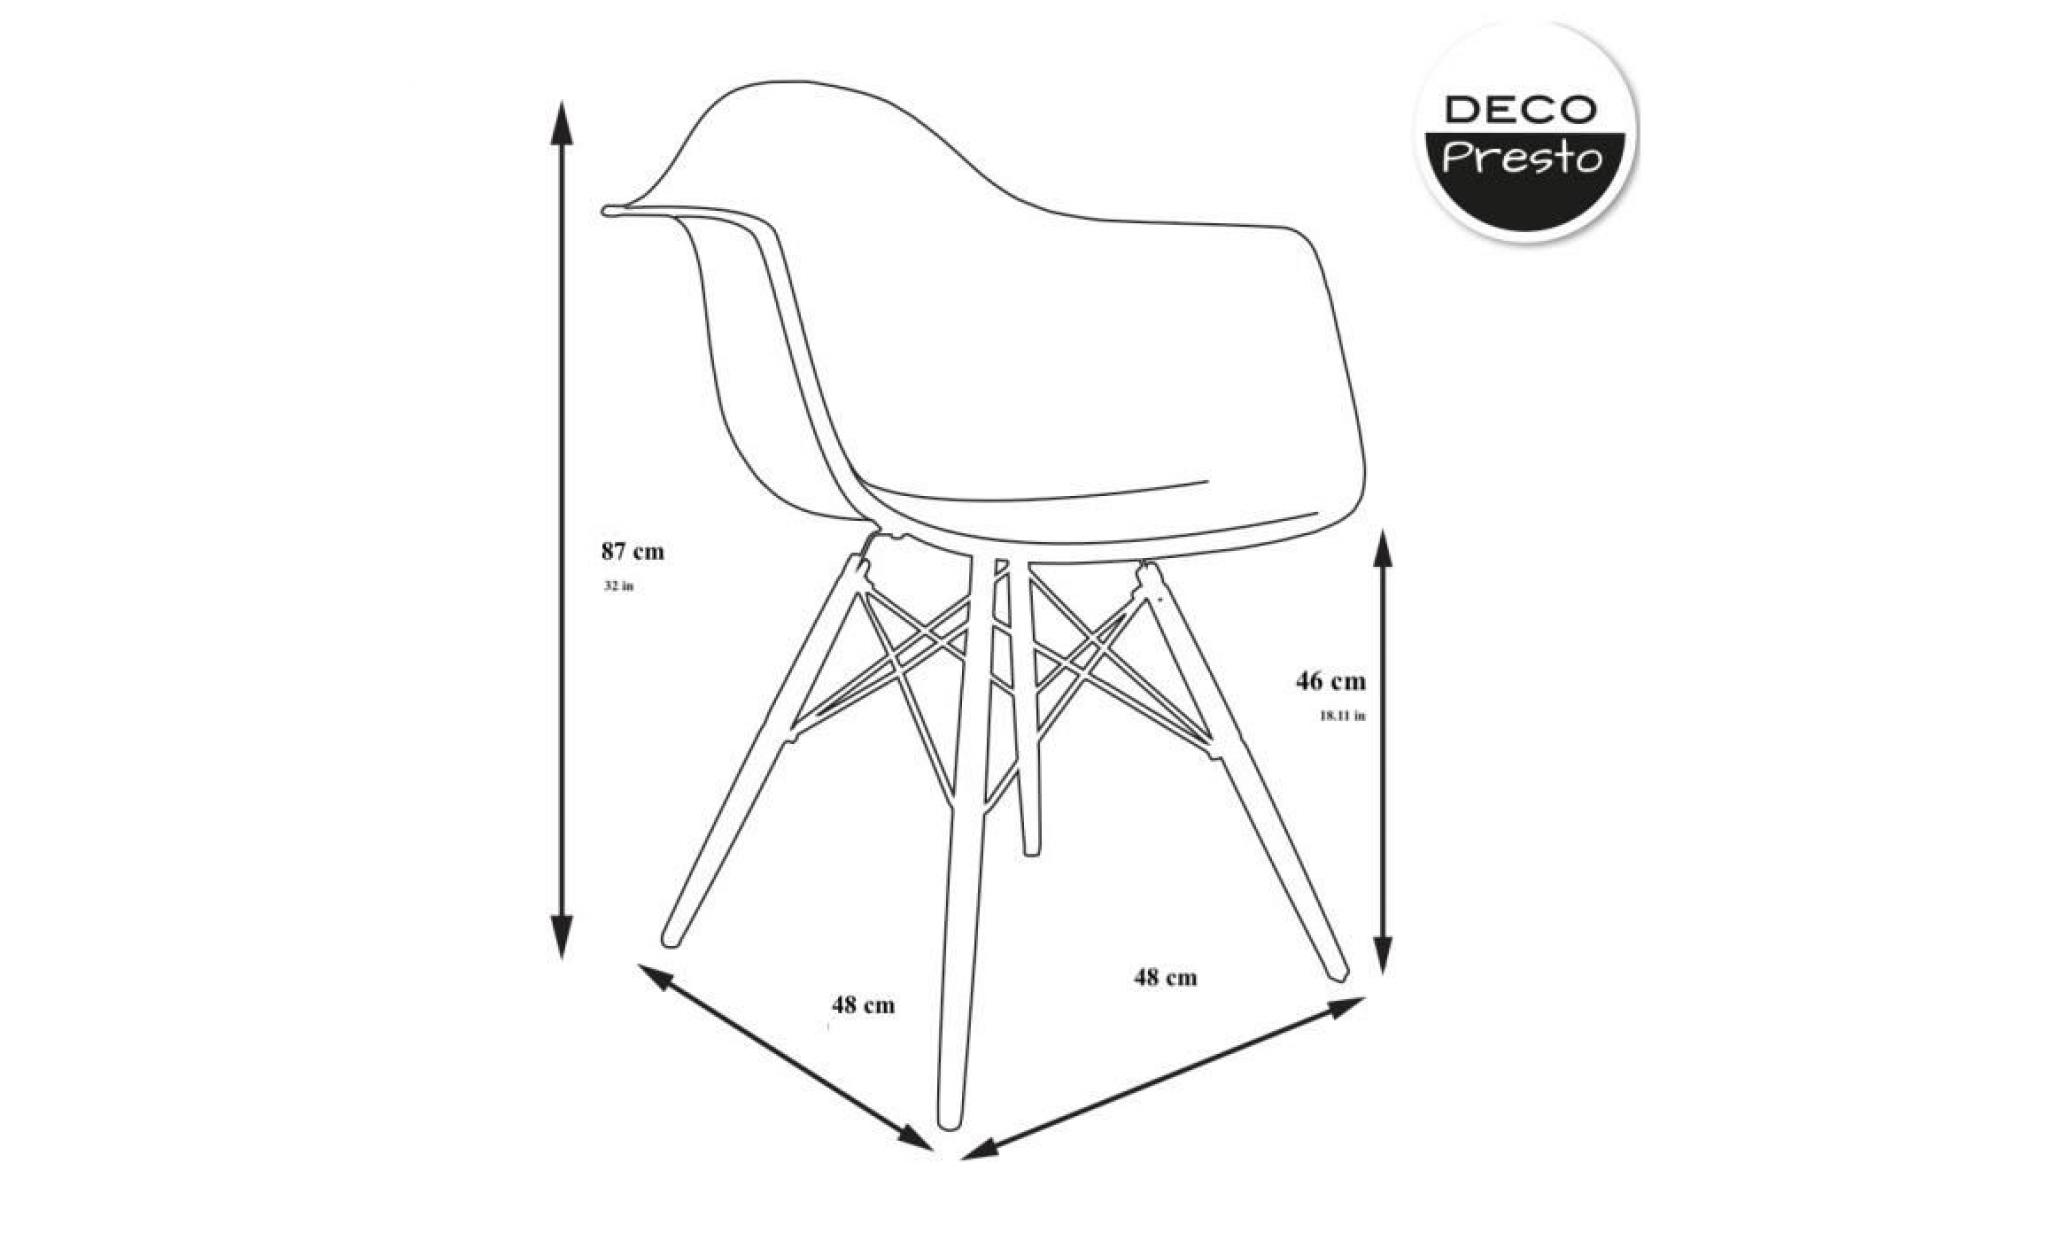 1 x fauteuil design scandinave  bleu ocean pieds: bois naturel decopresto dp dawl bo 1 pas cher